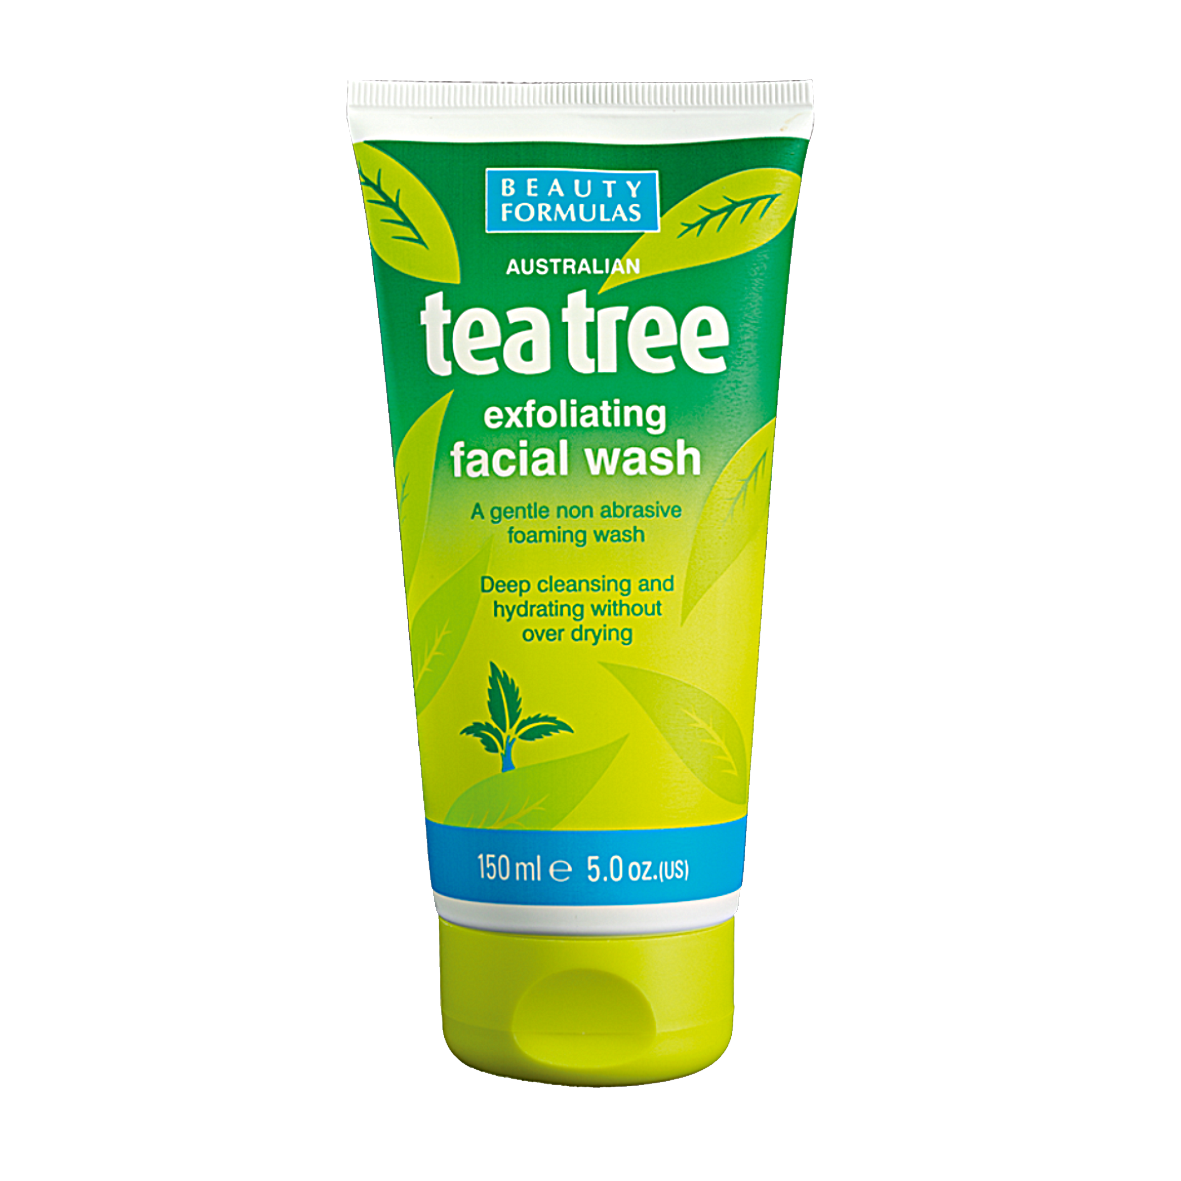 Tea tree exfoliating facial wash.